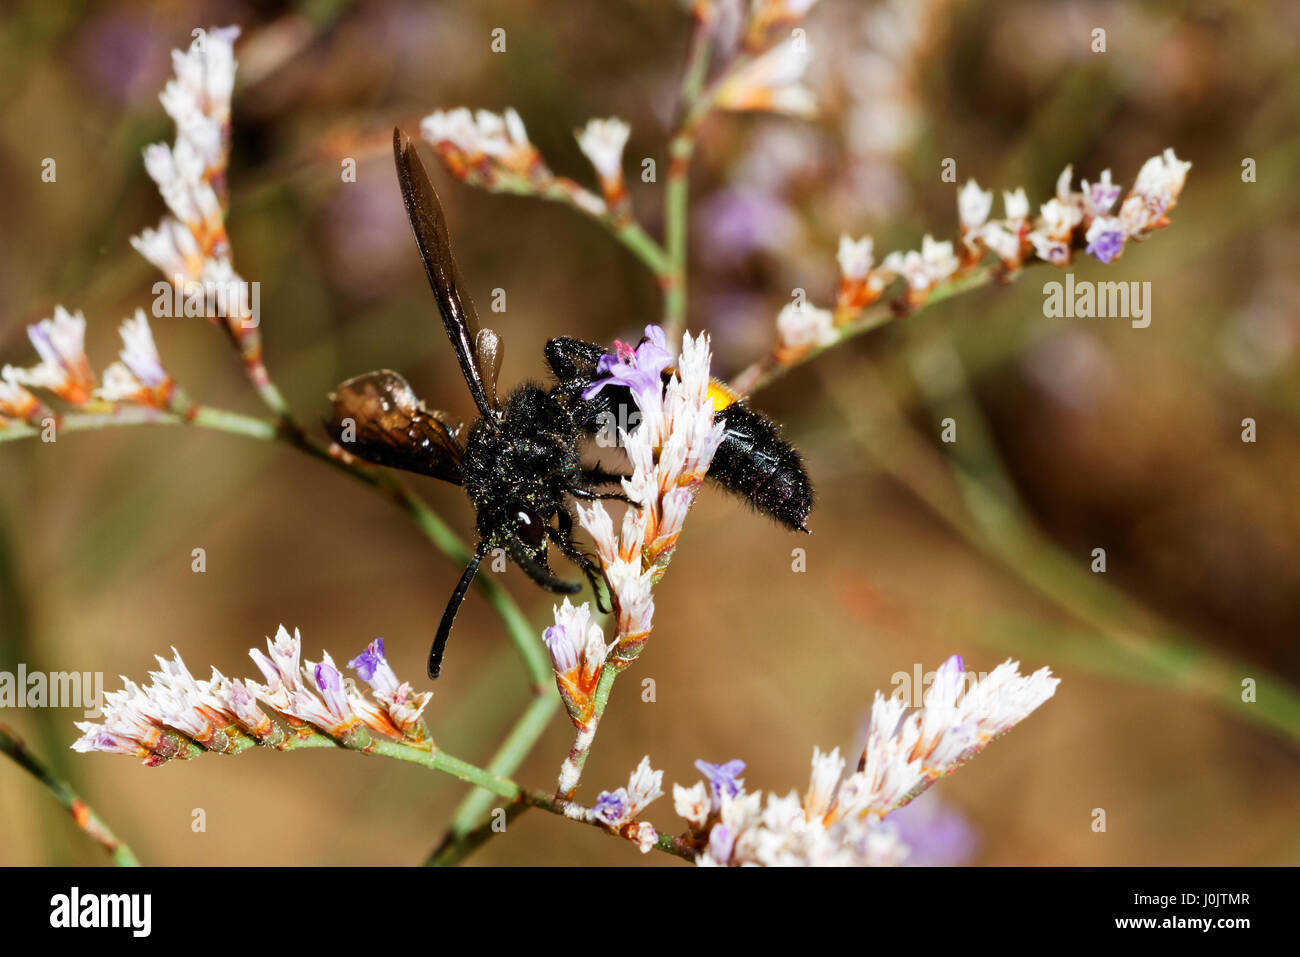 A wasp on the Limonium cancelatum flower, Telascica Nature Park, Croatia Stock Photo